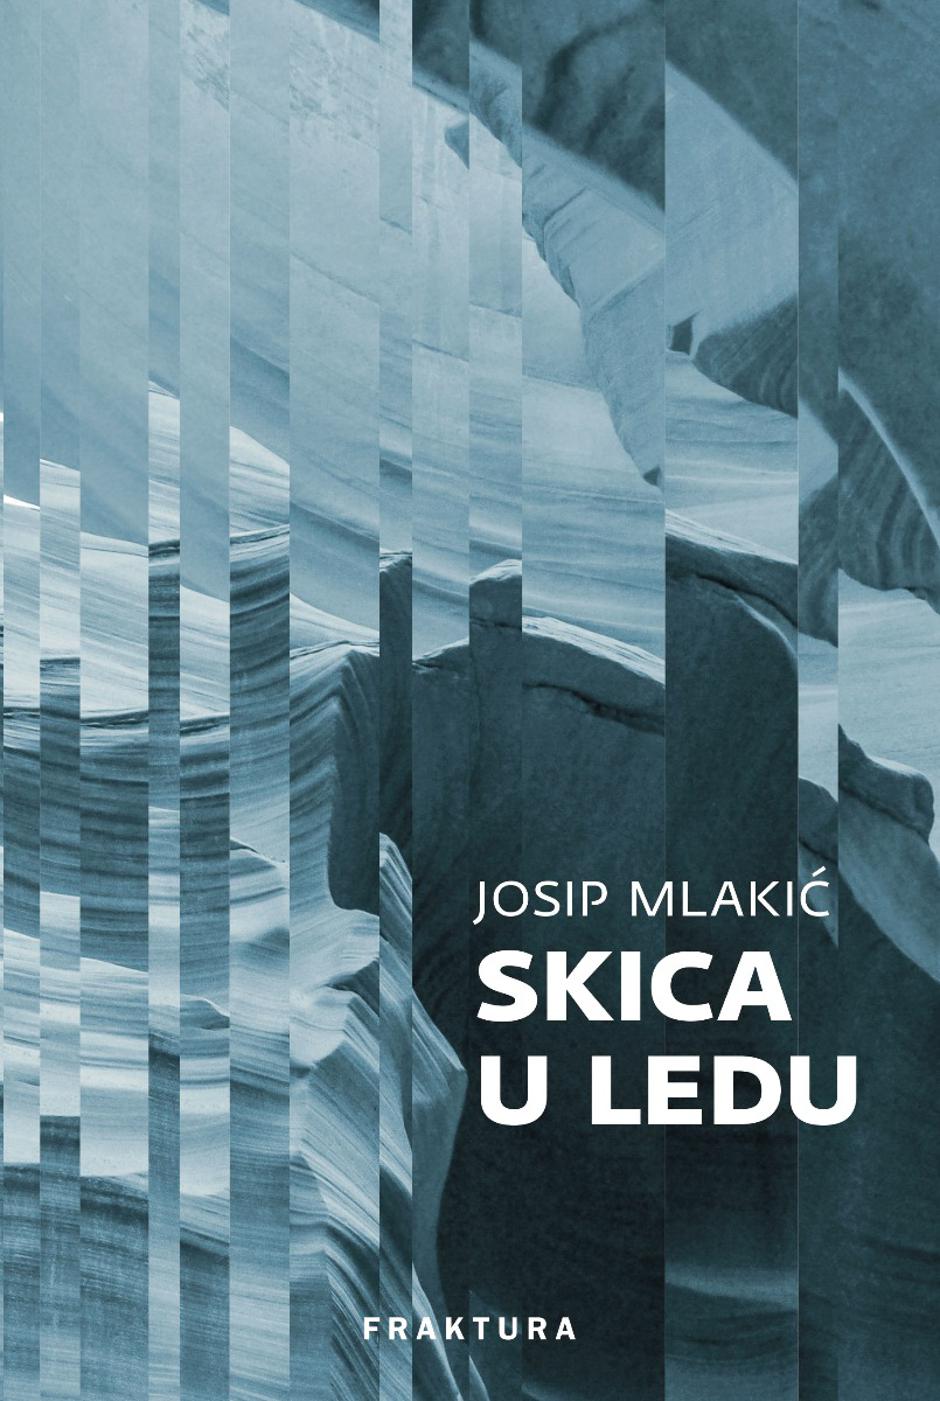 Josip Mlakić, "Skica u ledu" | Author: 